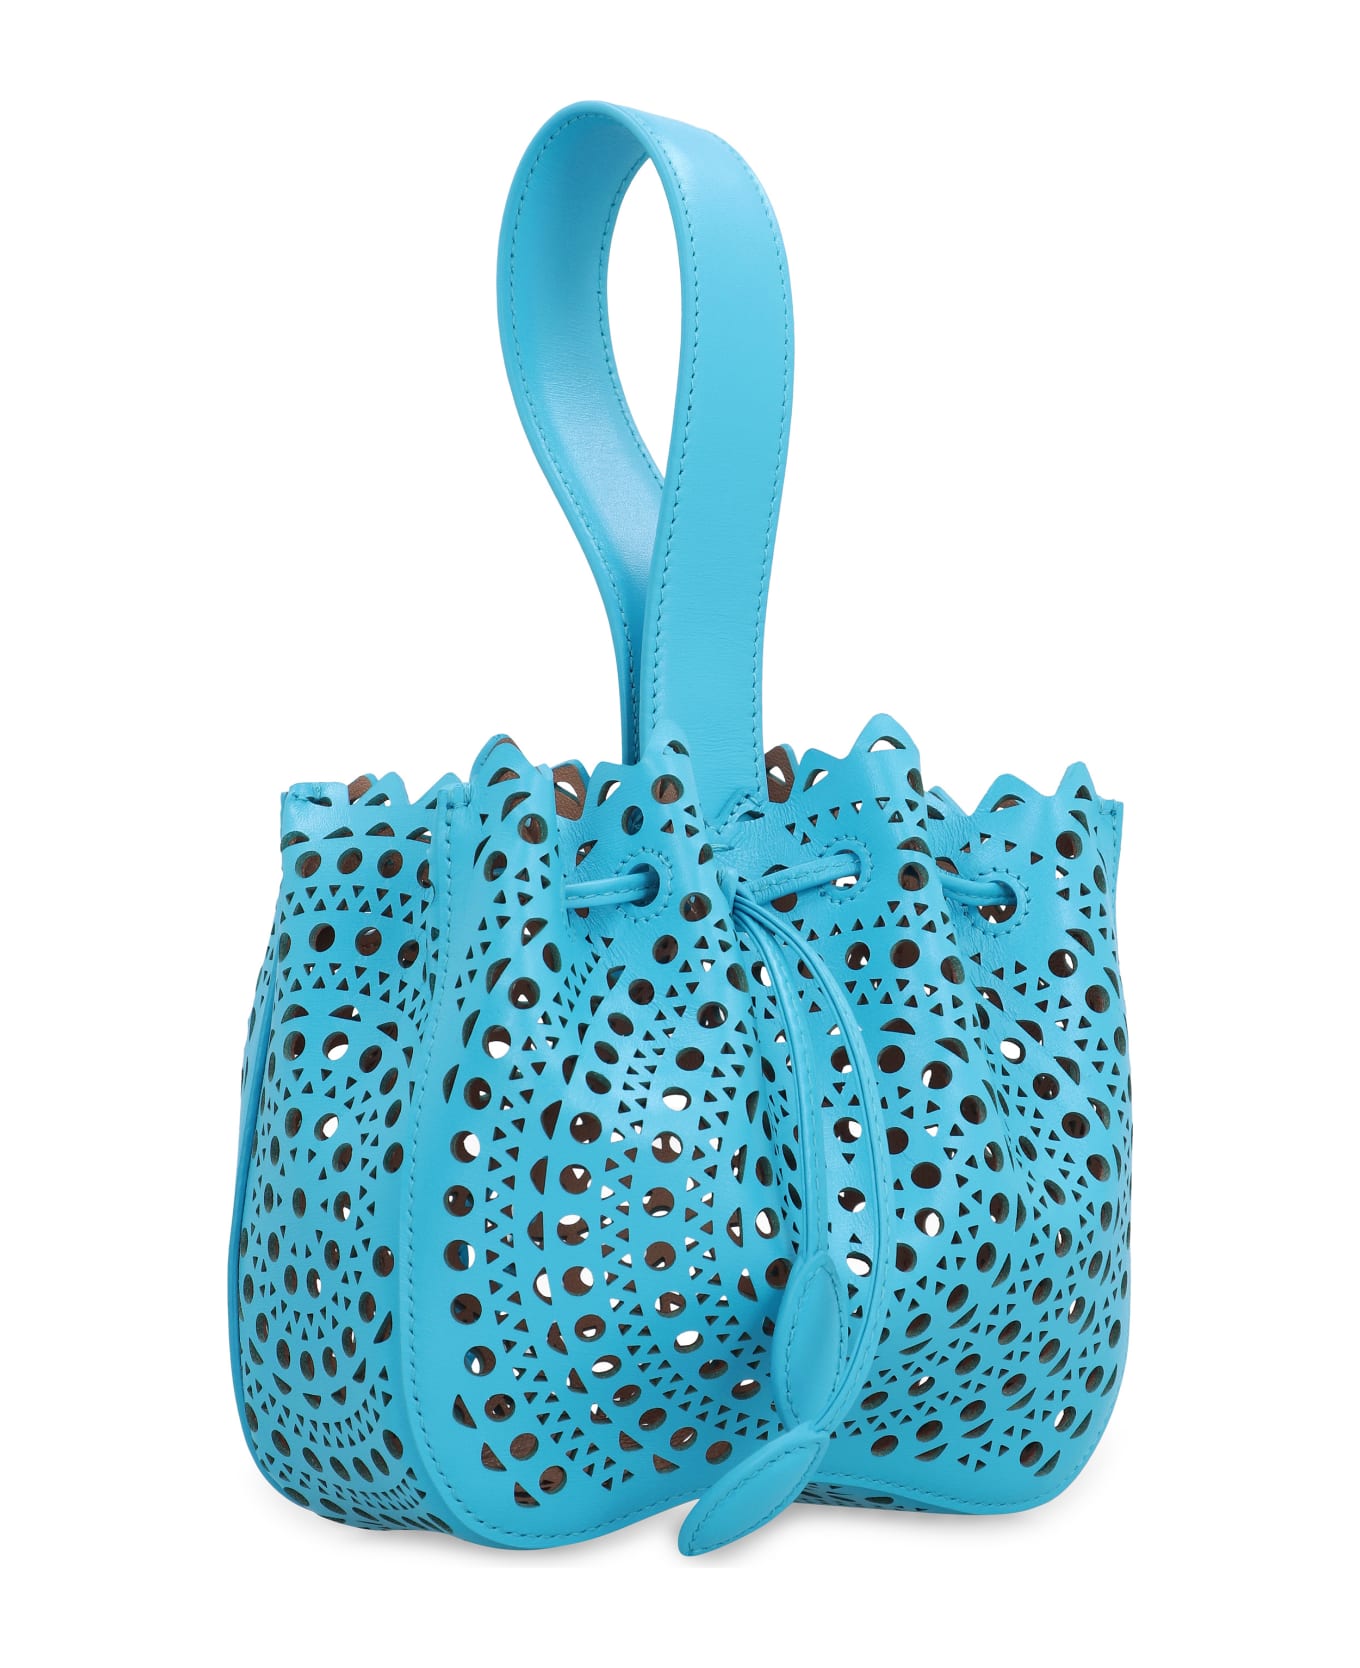 Alaia Rose Marie Leather Handbag - blue